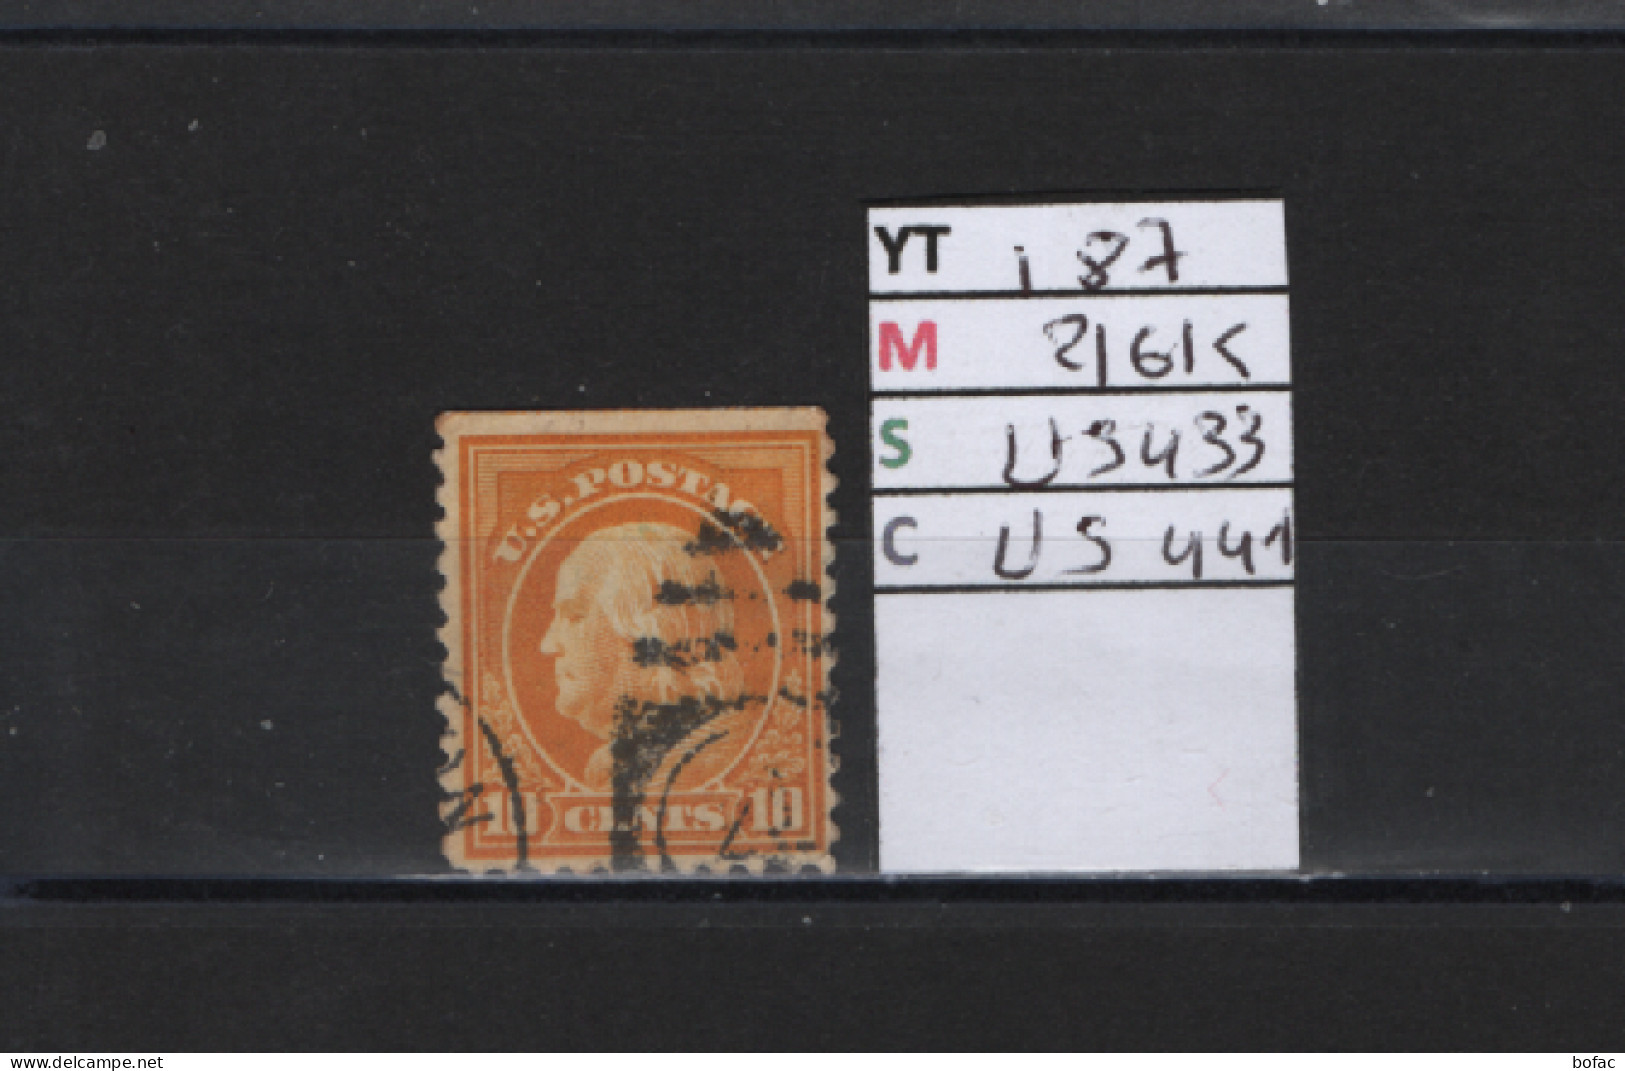 PRIX FIXE Obl 187 YT 216K MIC US433 SCOT US441 GIB  Benjamin Franklin  1912 1915 58/06 Dentelé 3 Cotés - Used Stamps